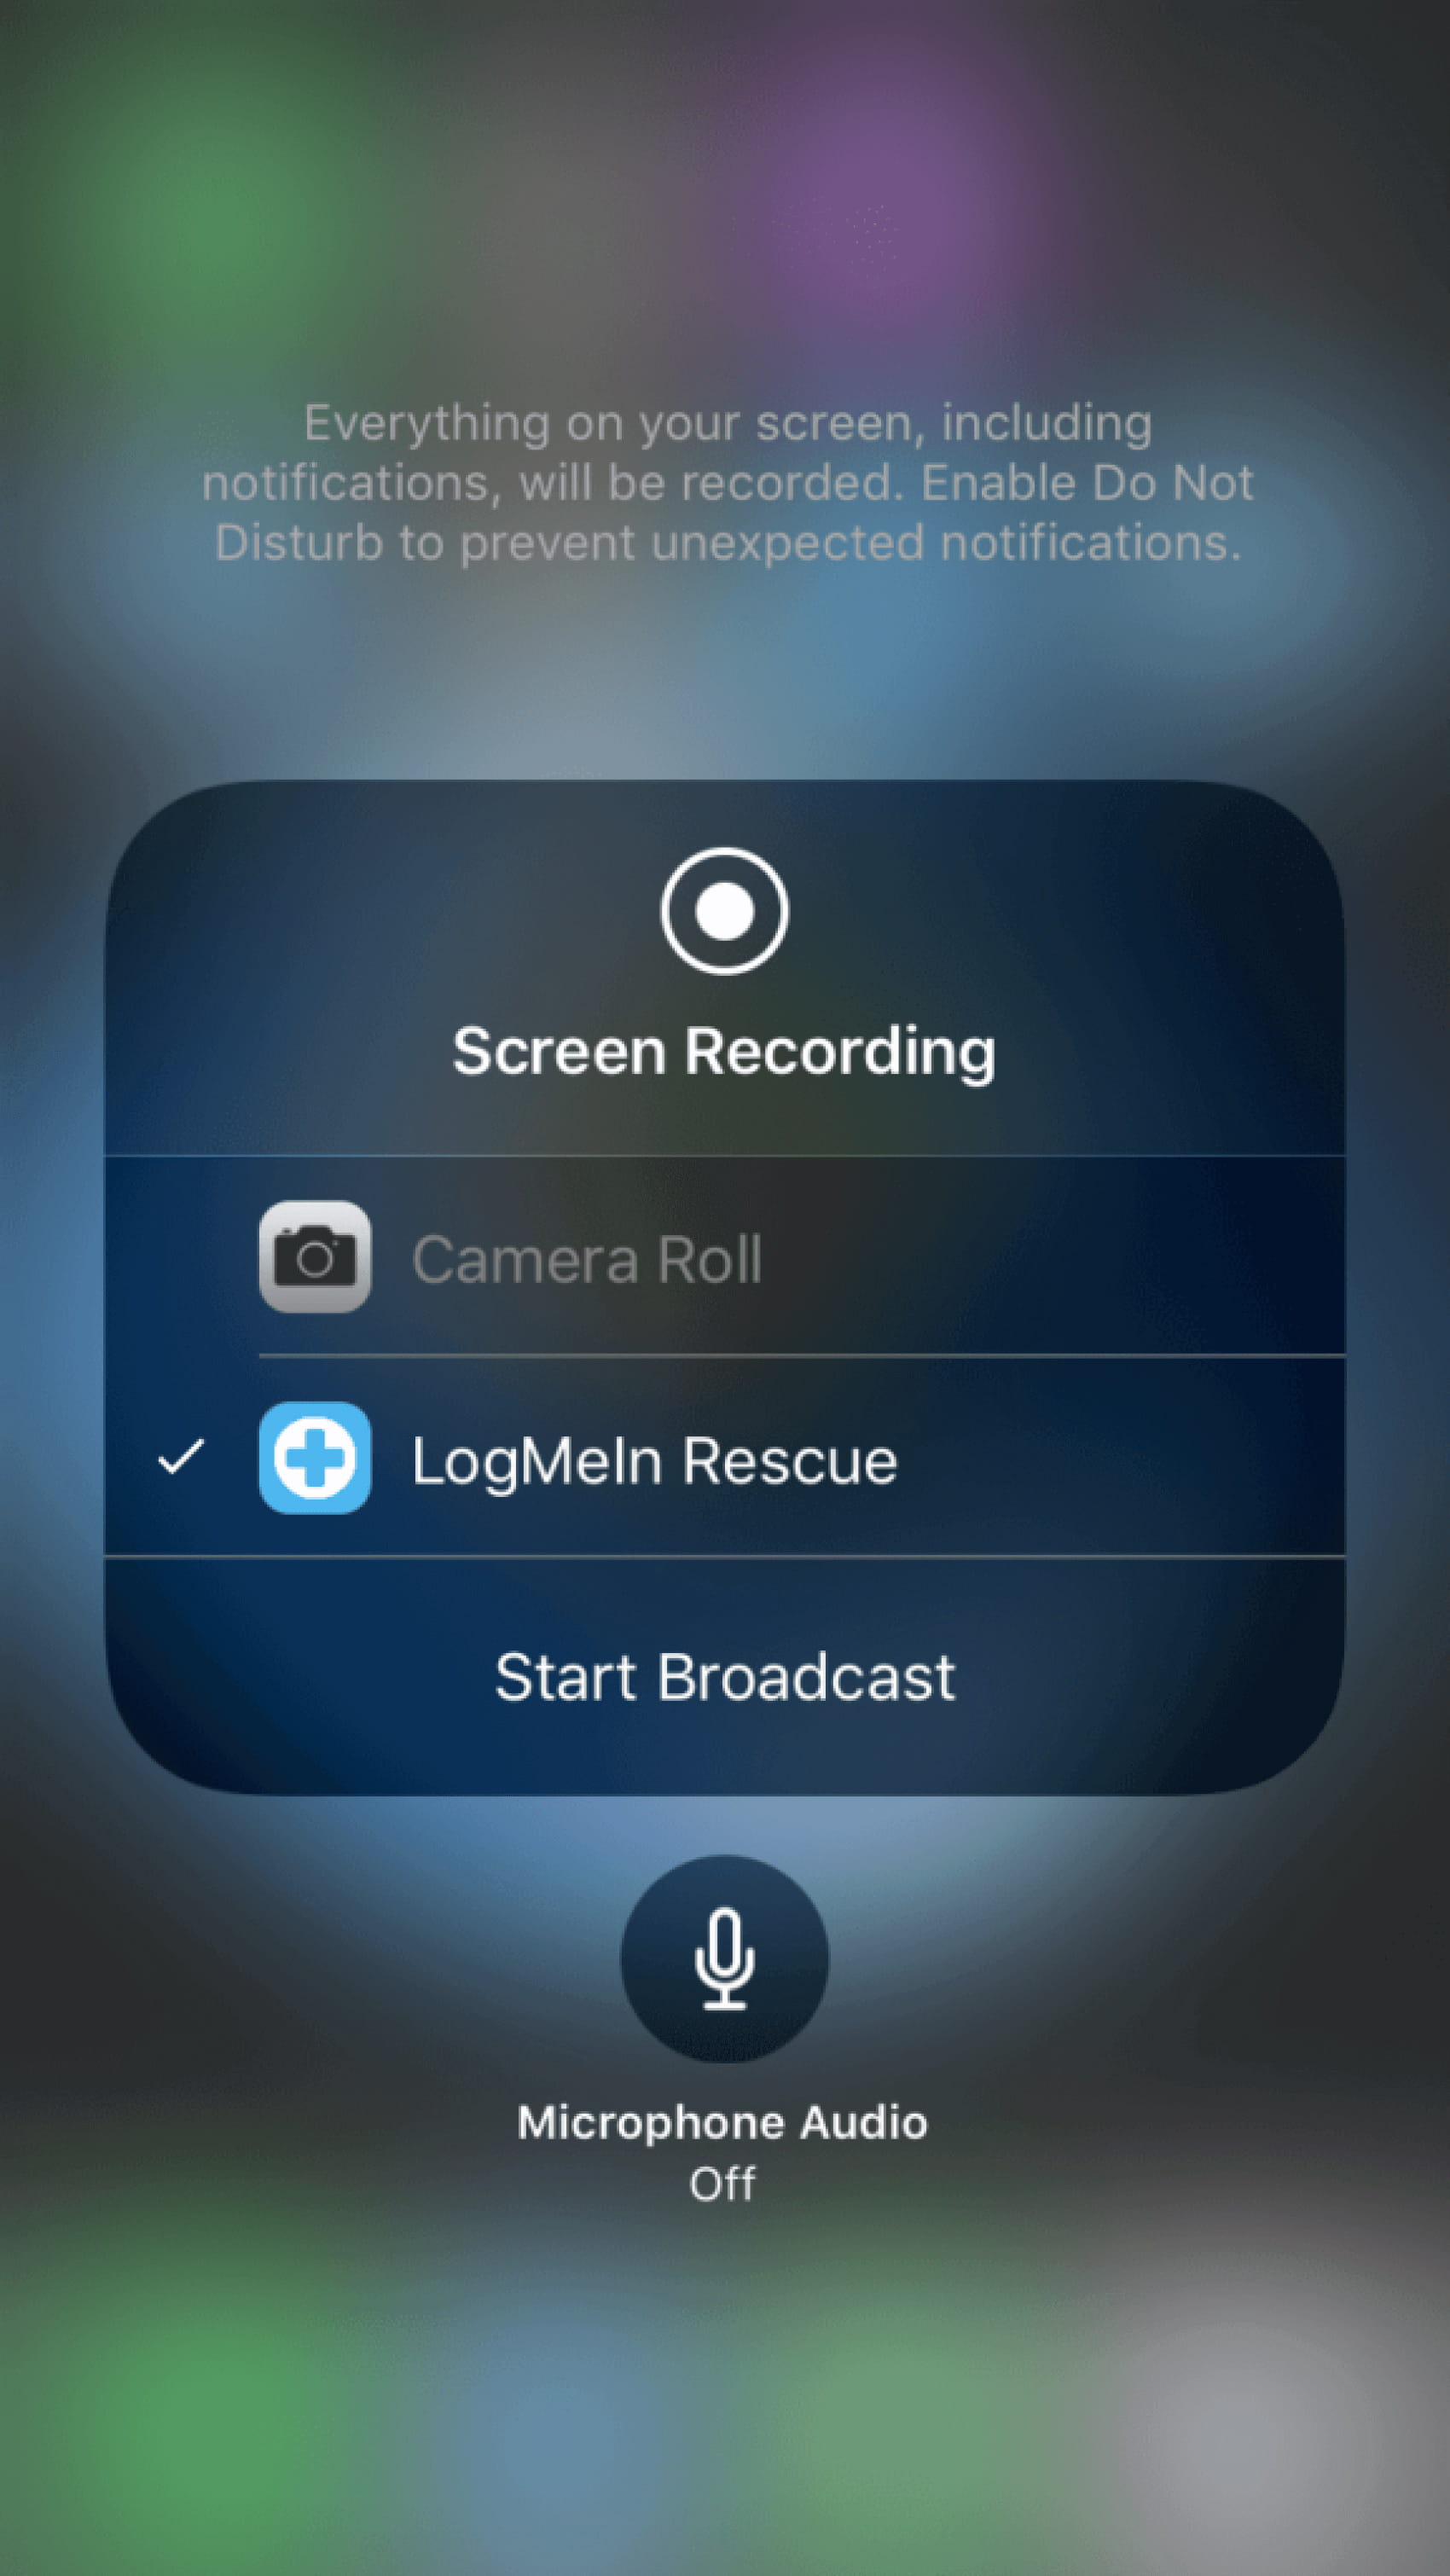 LogMeIn Rescue screen recording window.